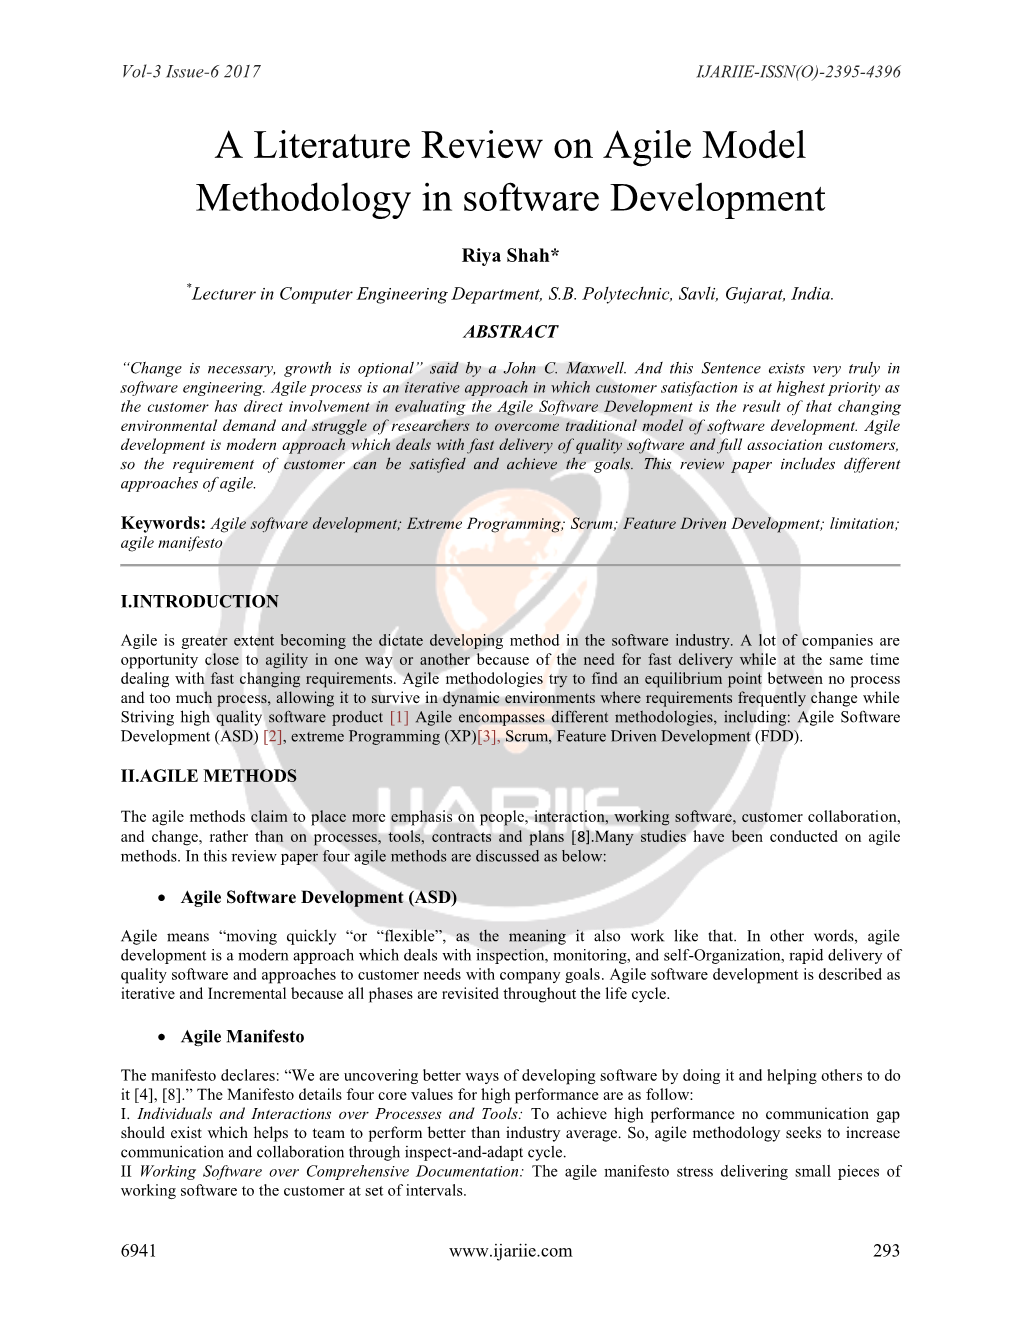 literature review of software development